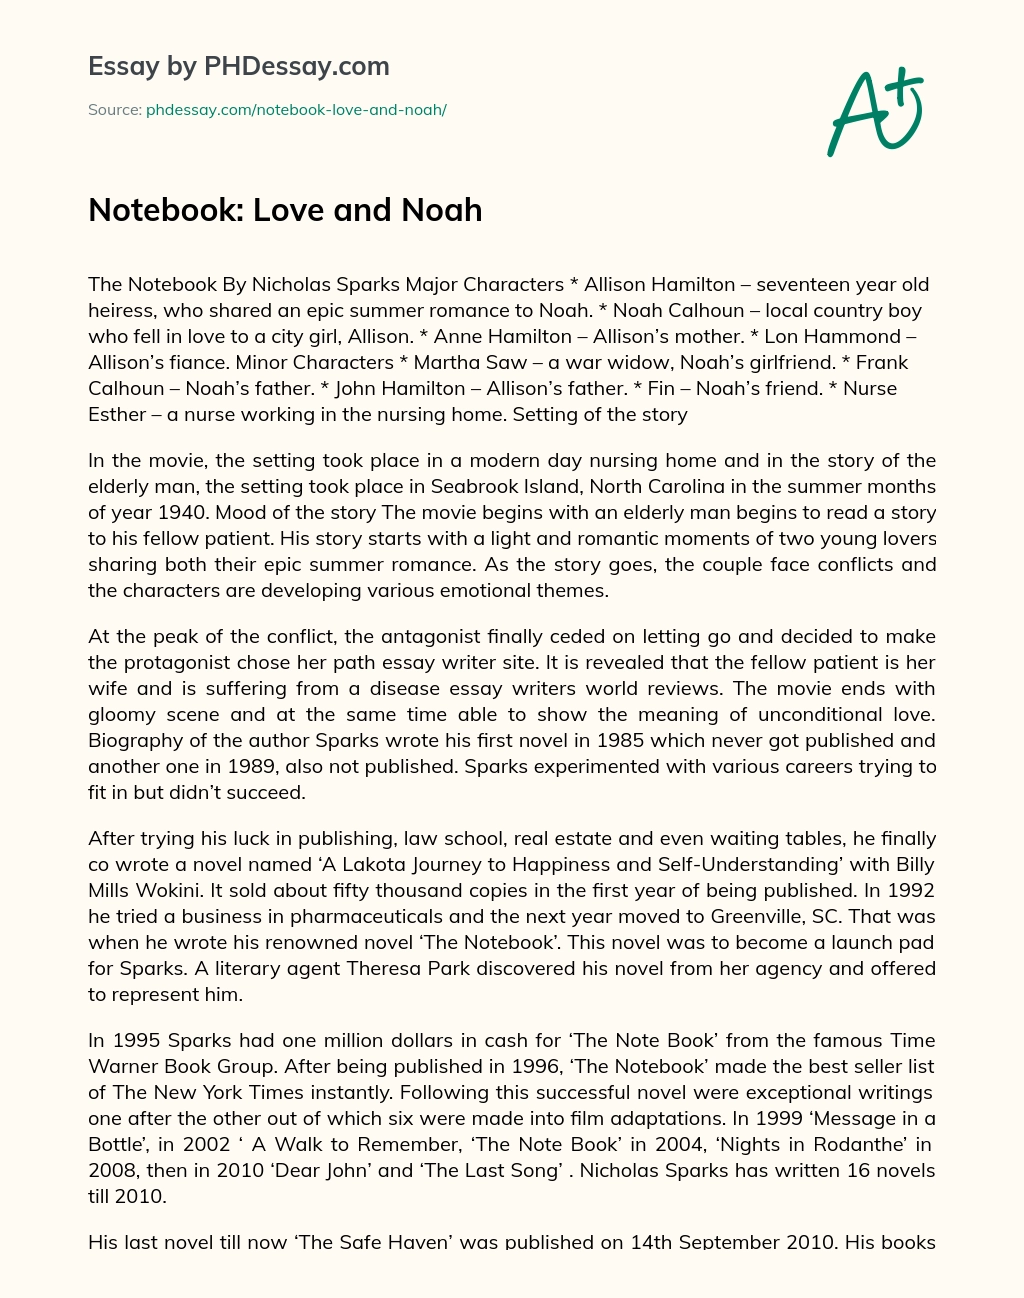 Notebook: Love and Noah essay